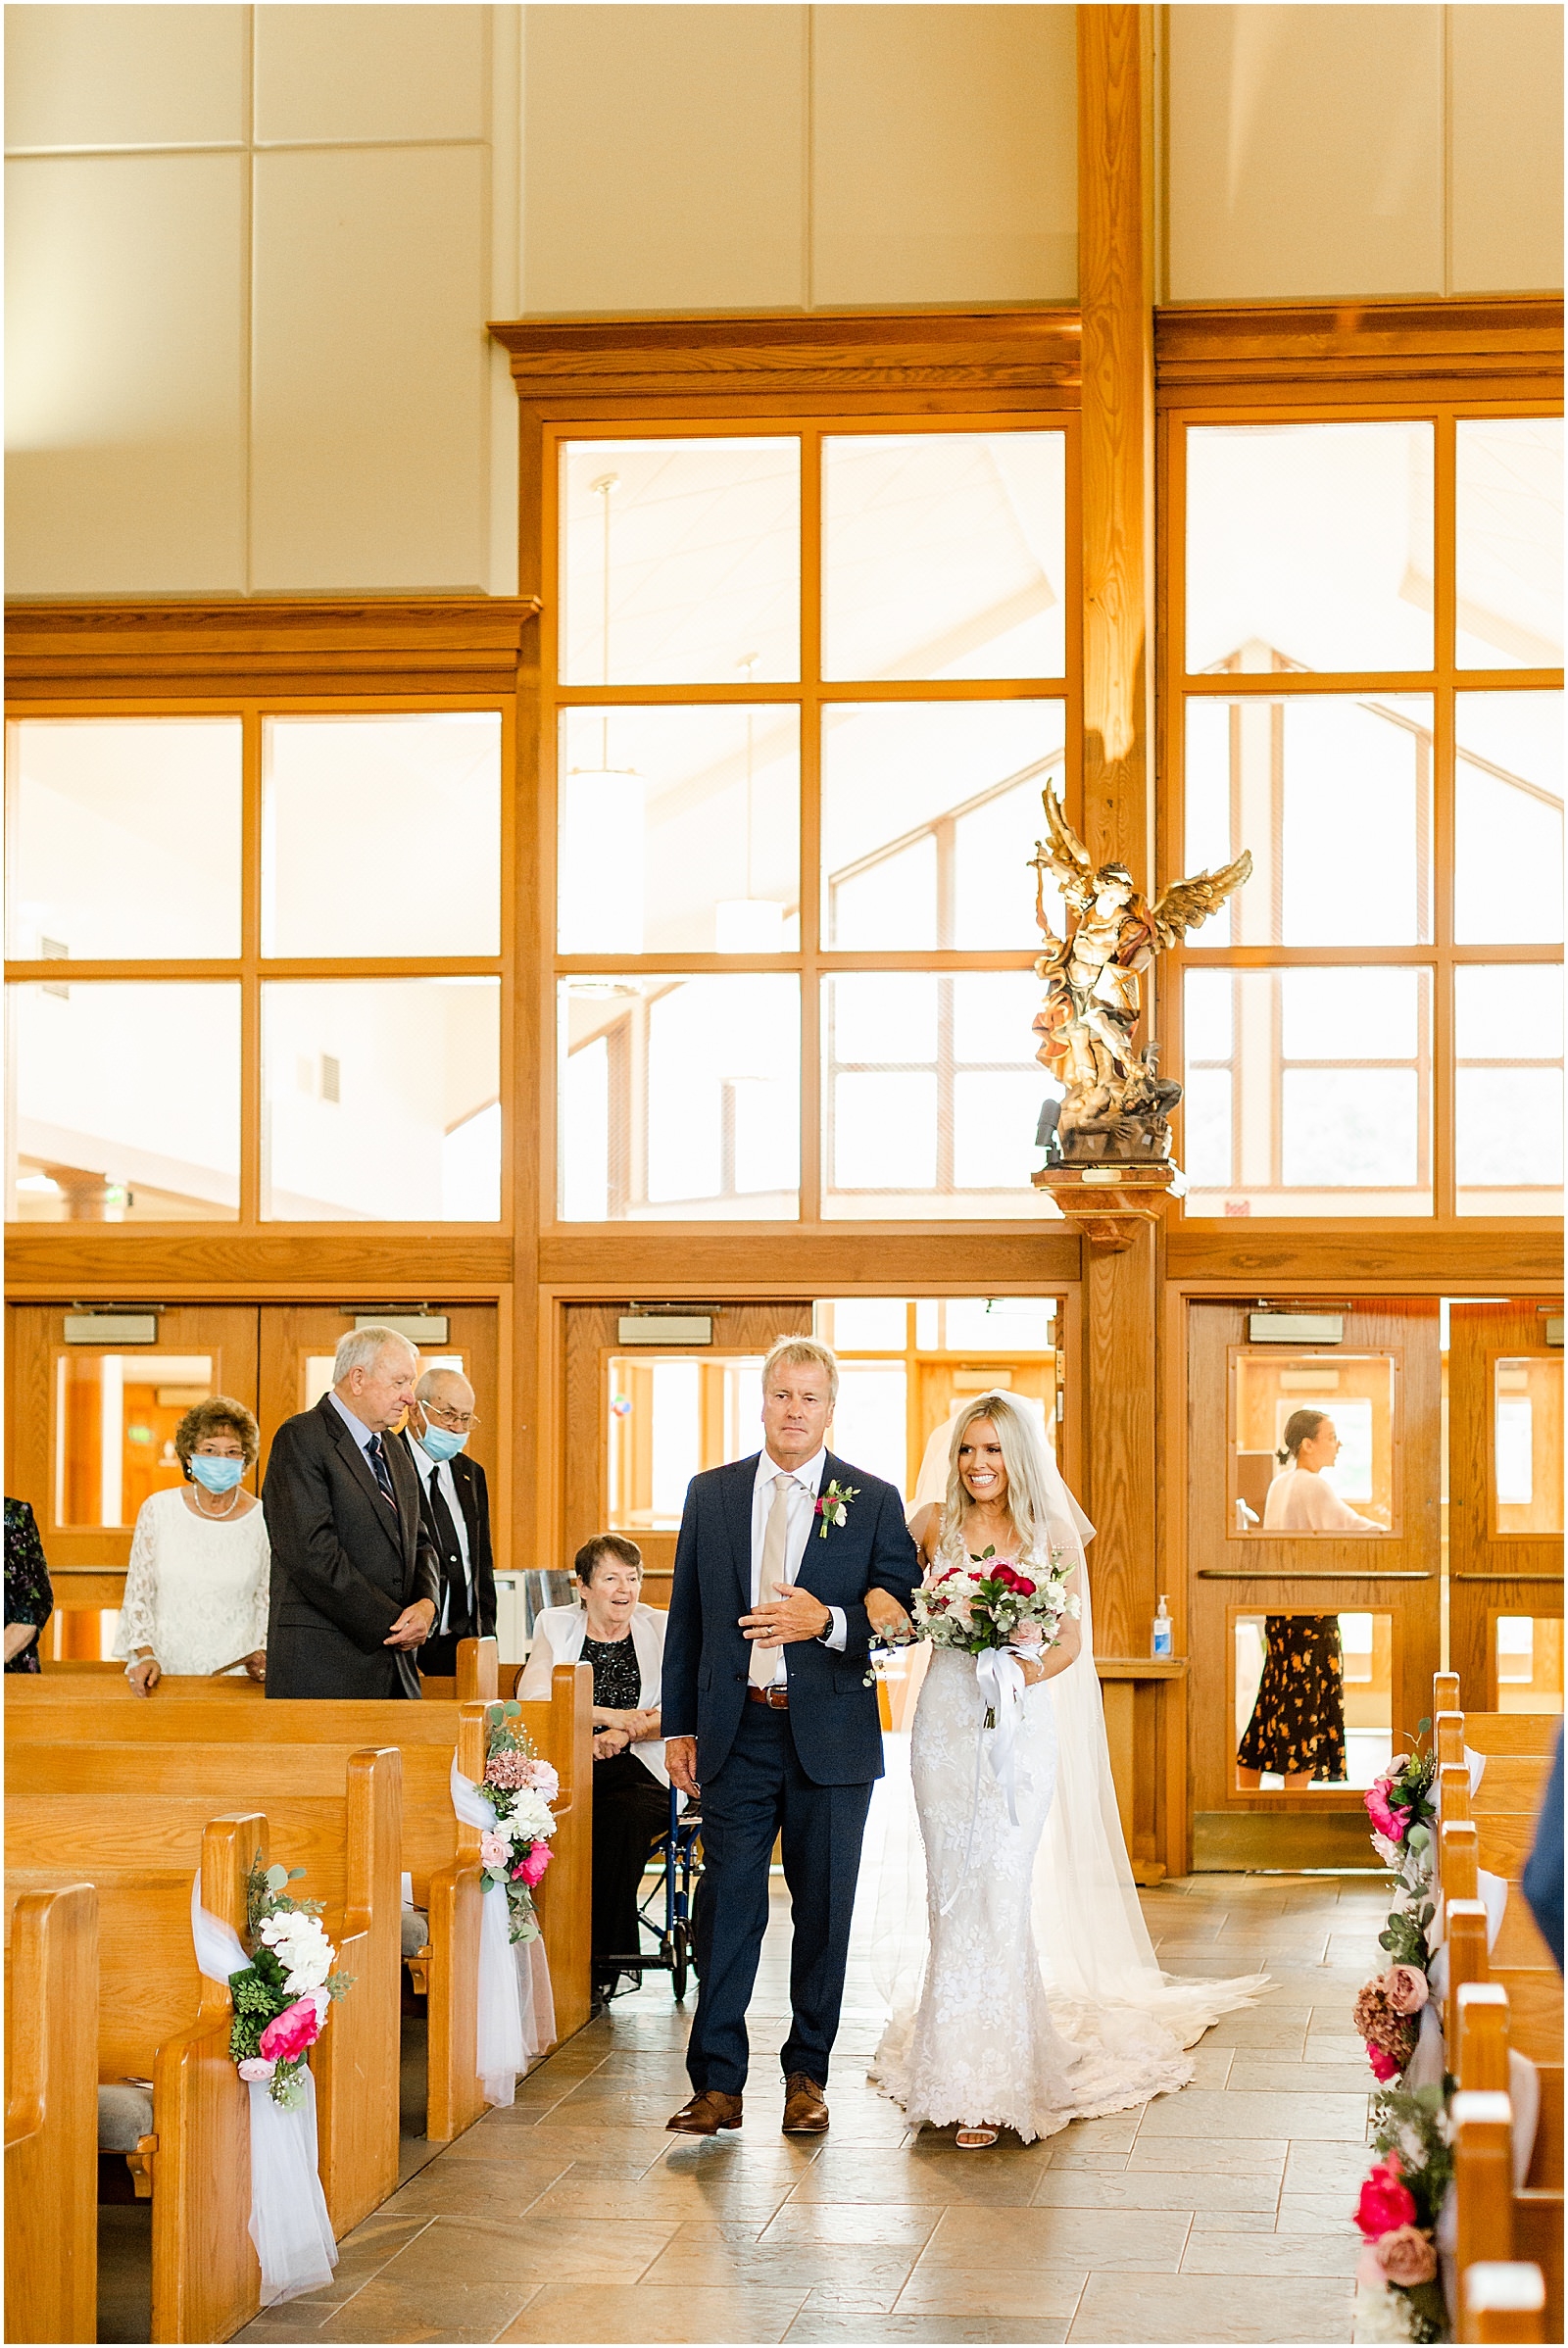 An Evansville Country Club Wedding | Madison and Christiaan | Bret and Brandie | Evansville Photographers | @bretandbrandie-0115.jpg